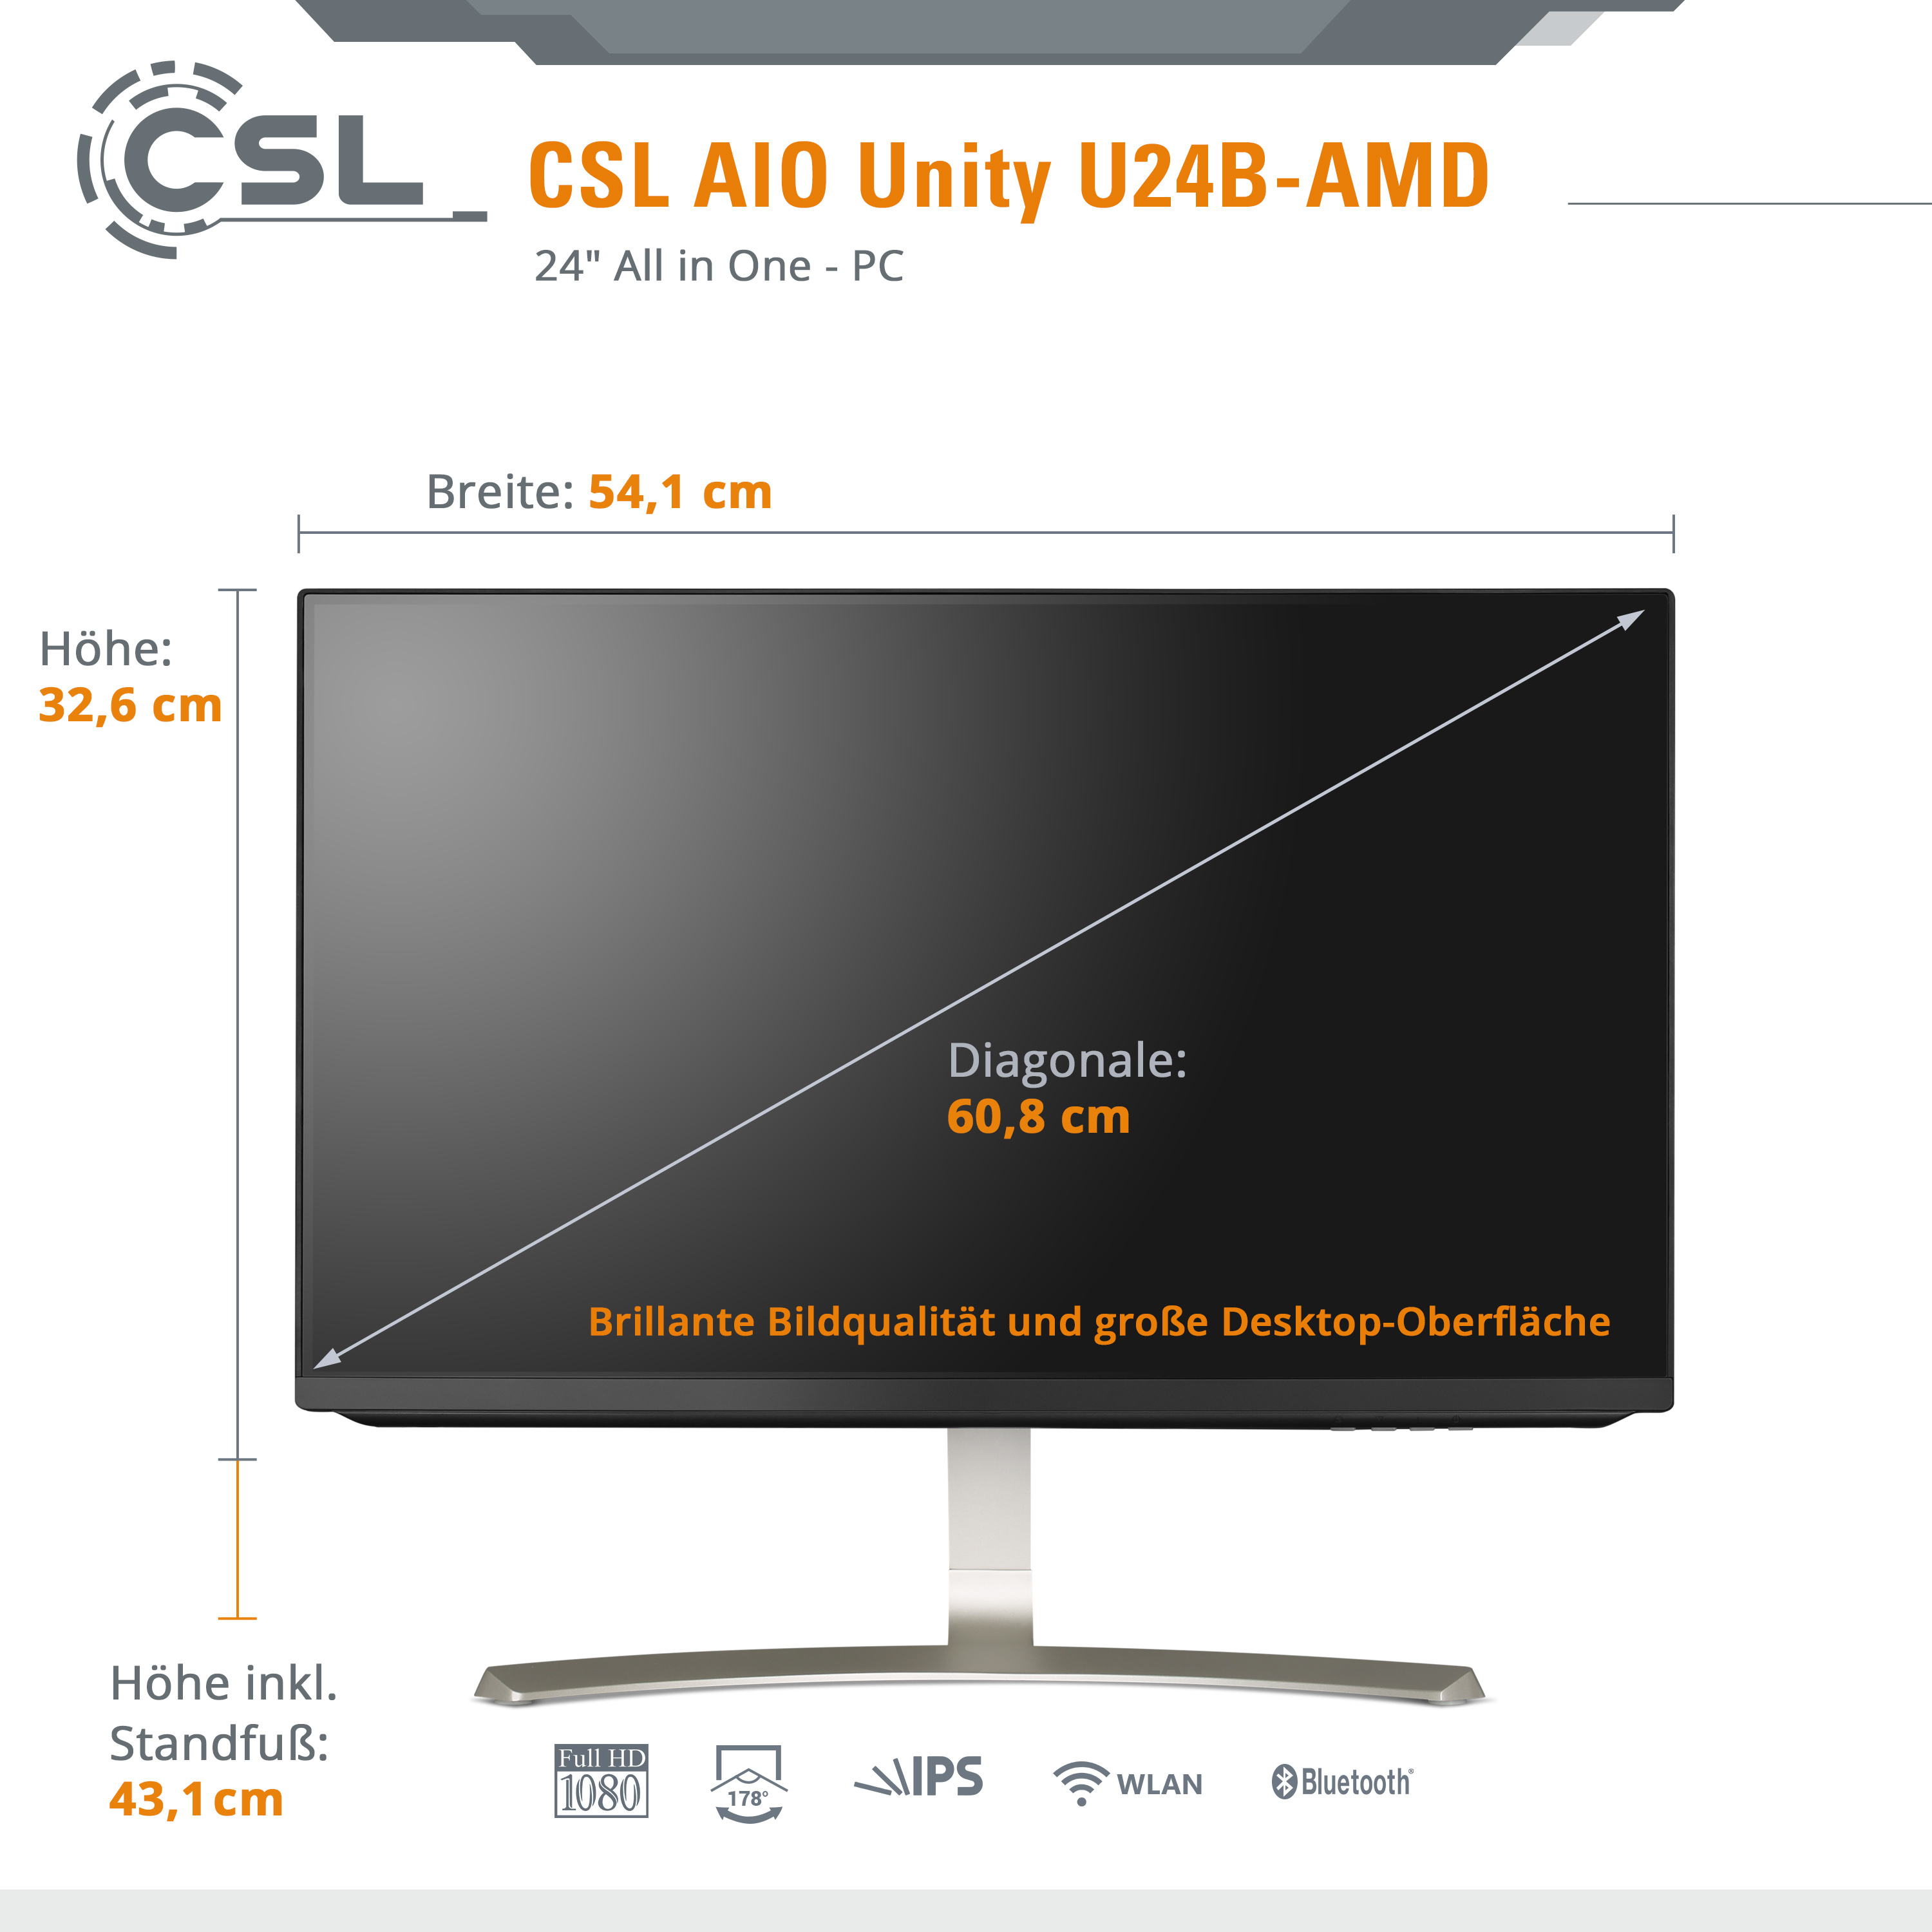 / GB GB Display, 6x 16 U24B-AMD RAM, All-in-One-PC Radeon 11 Win 4650G mit SSD, CSL 24 schwarz 3700 Unity Zoll Home, MHz 1000 Graphics, AMD